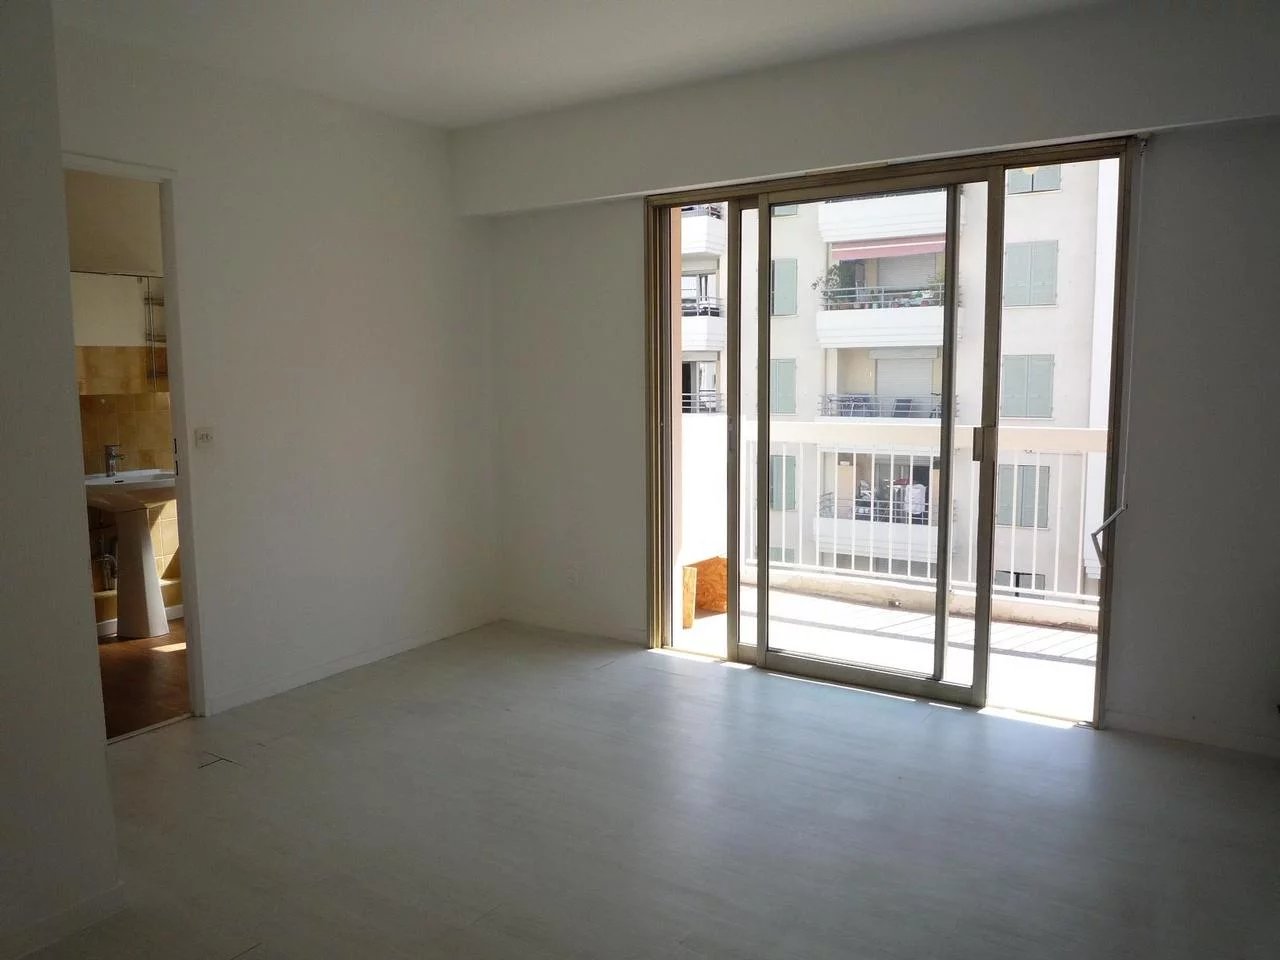 Appartement  2 Locali 54.55m2  In vendita   260 000 €